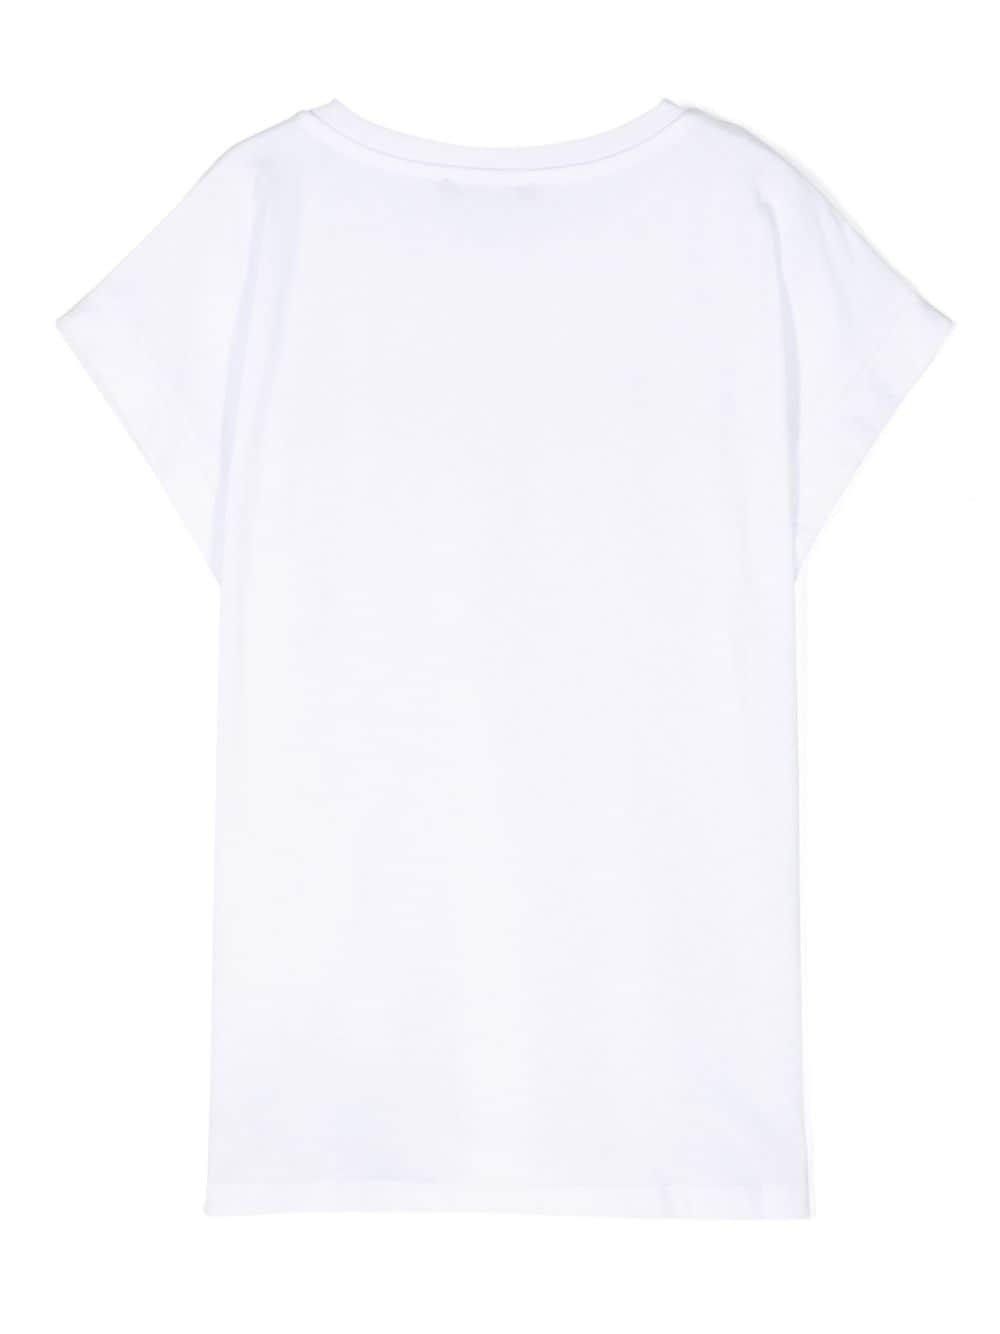 T-shirt blanc/or pour fille